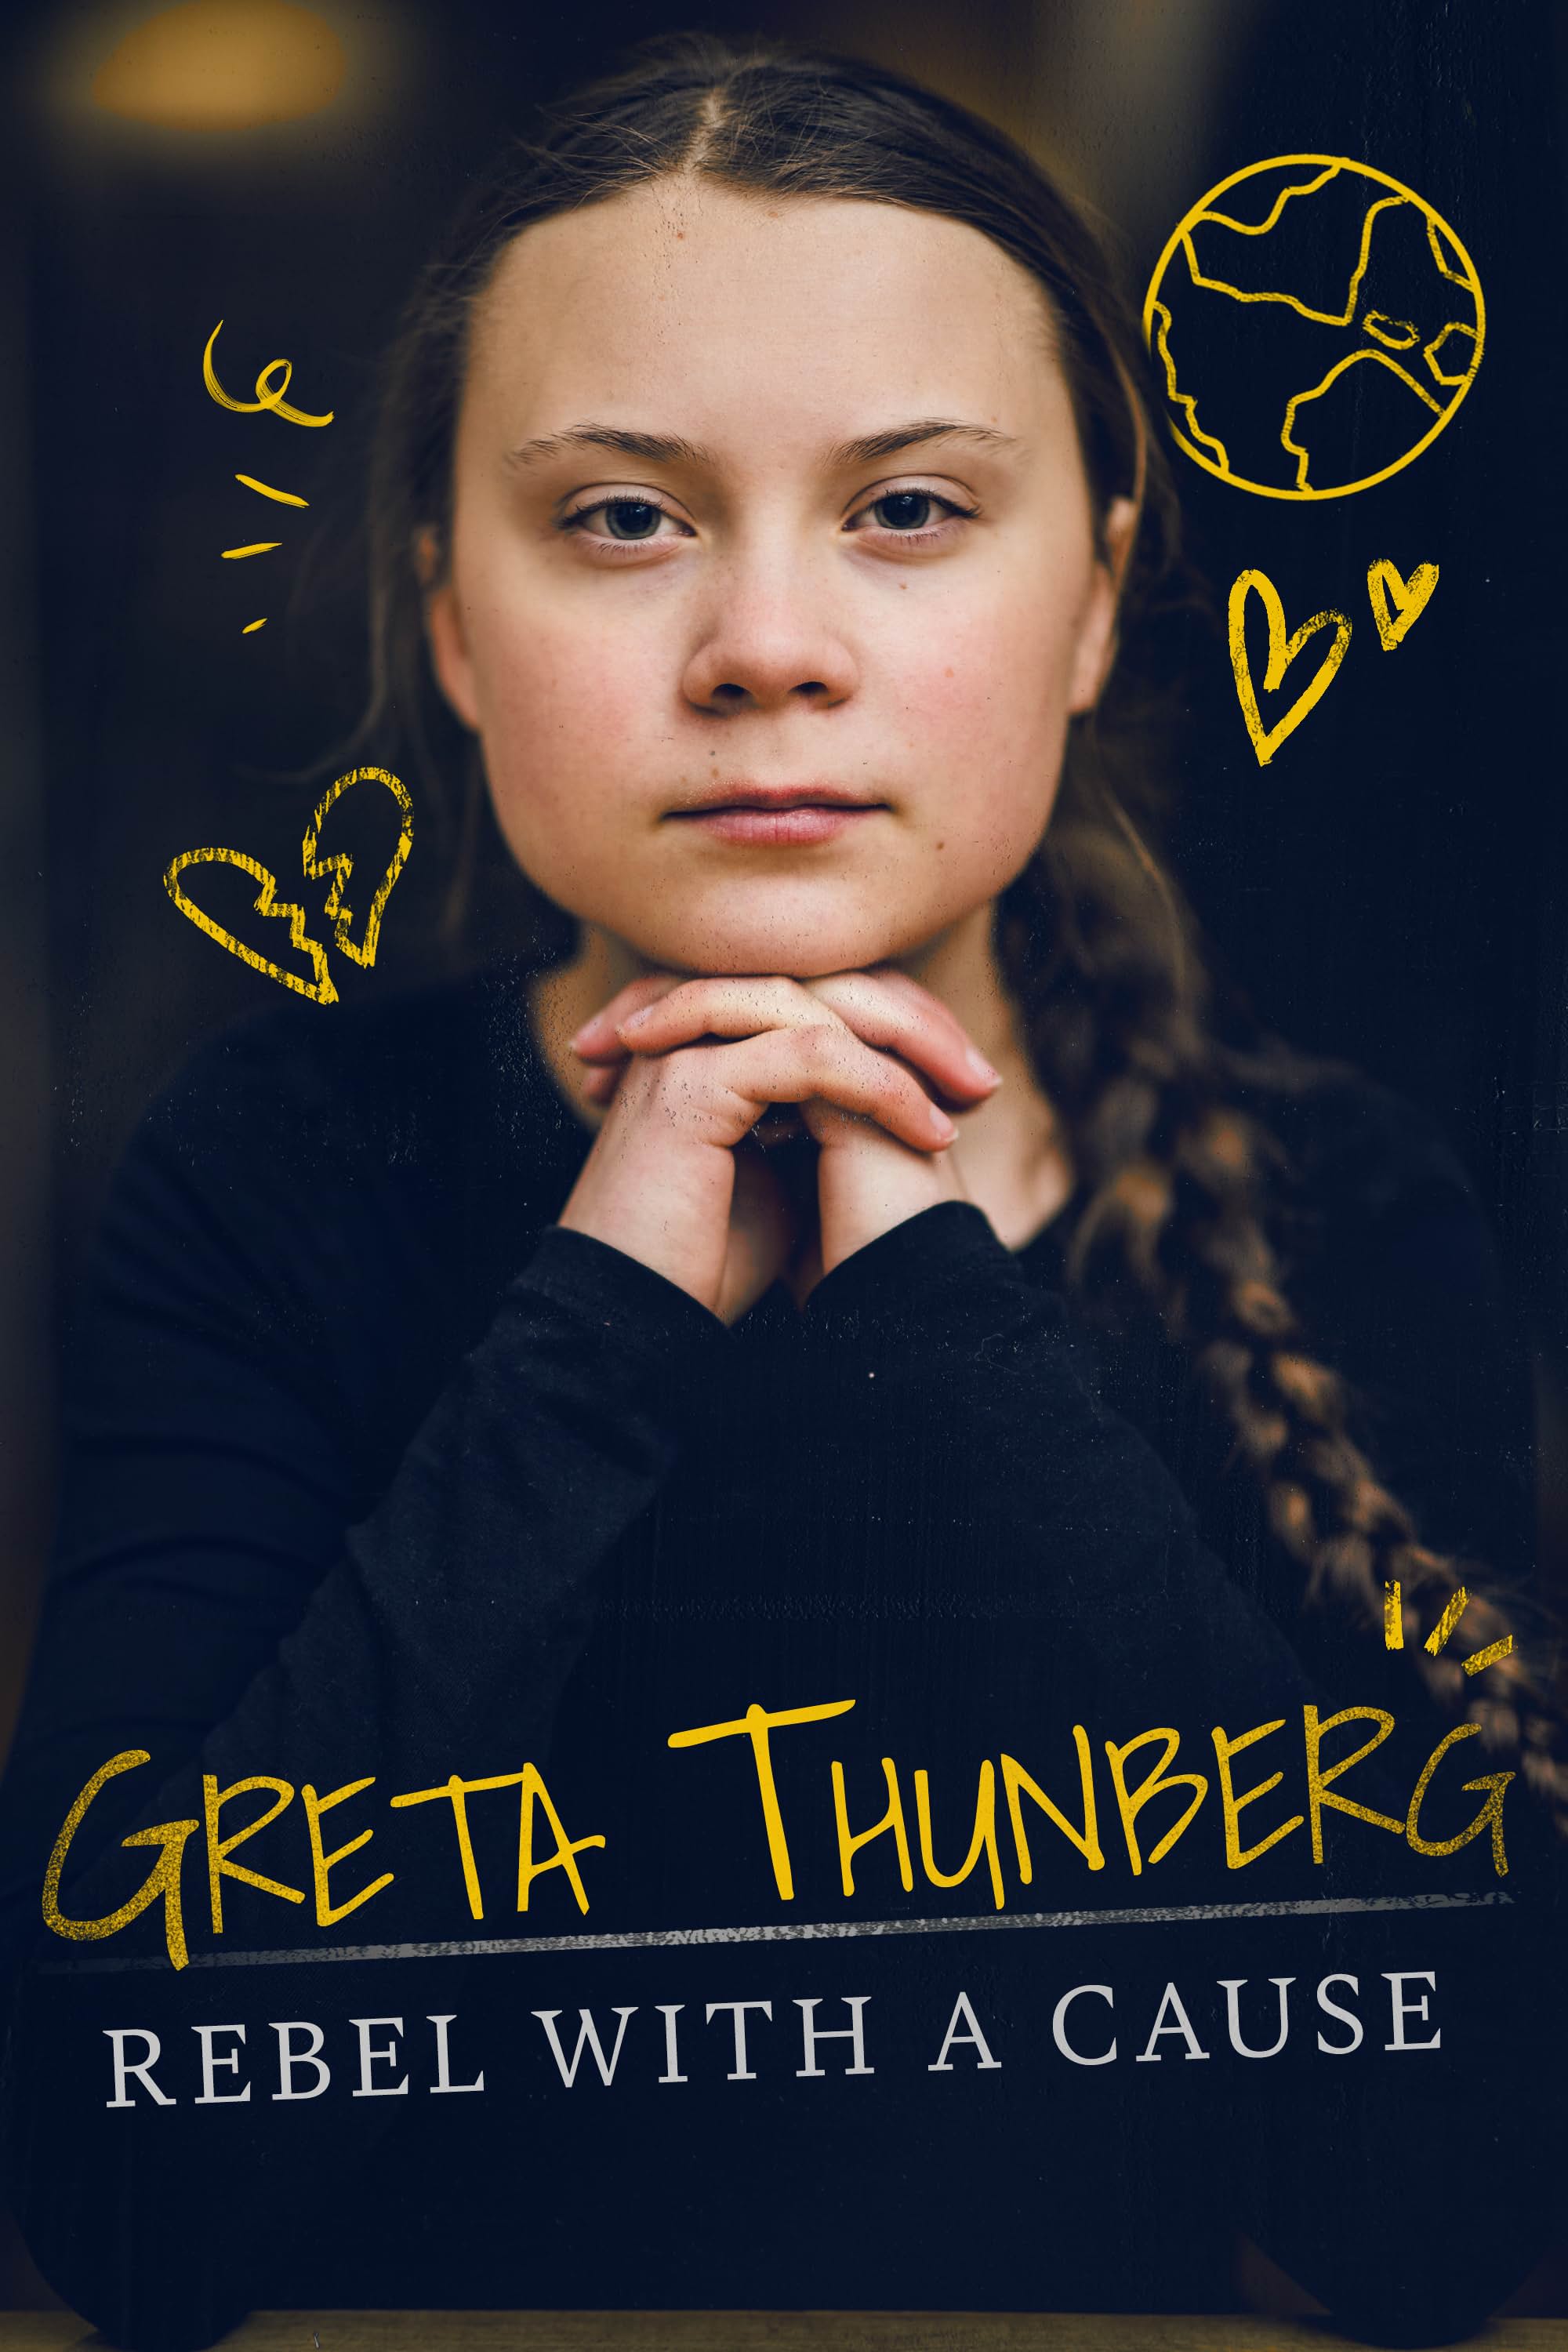     Greta Thunberg: Rebel with a Cause